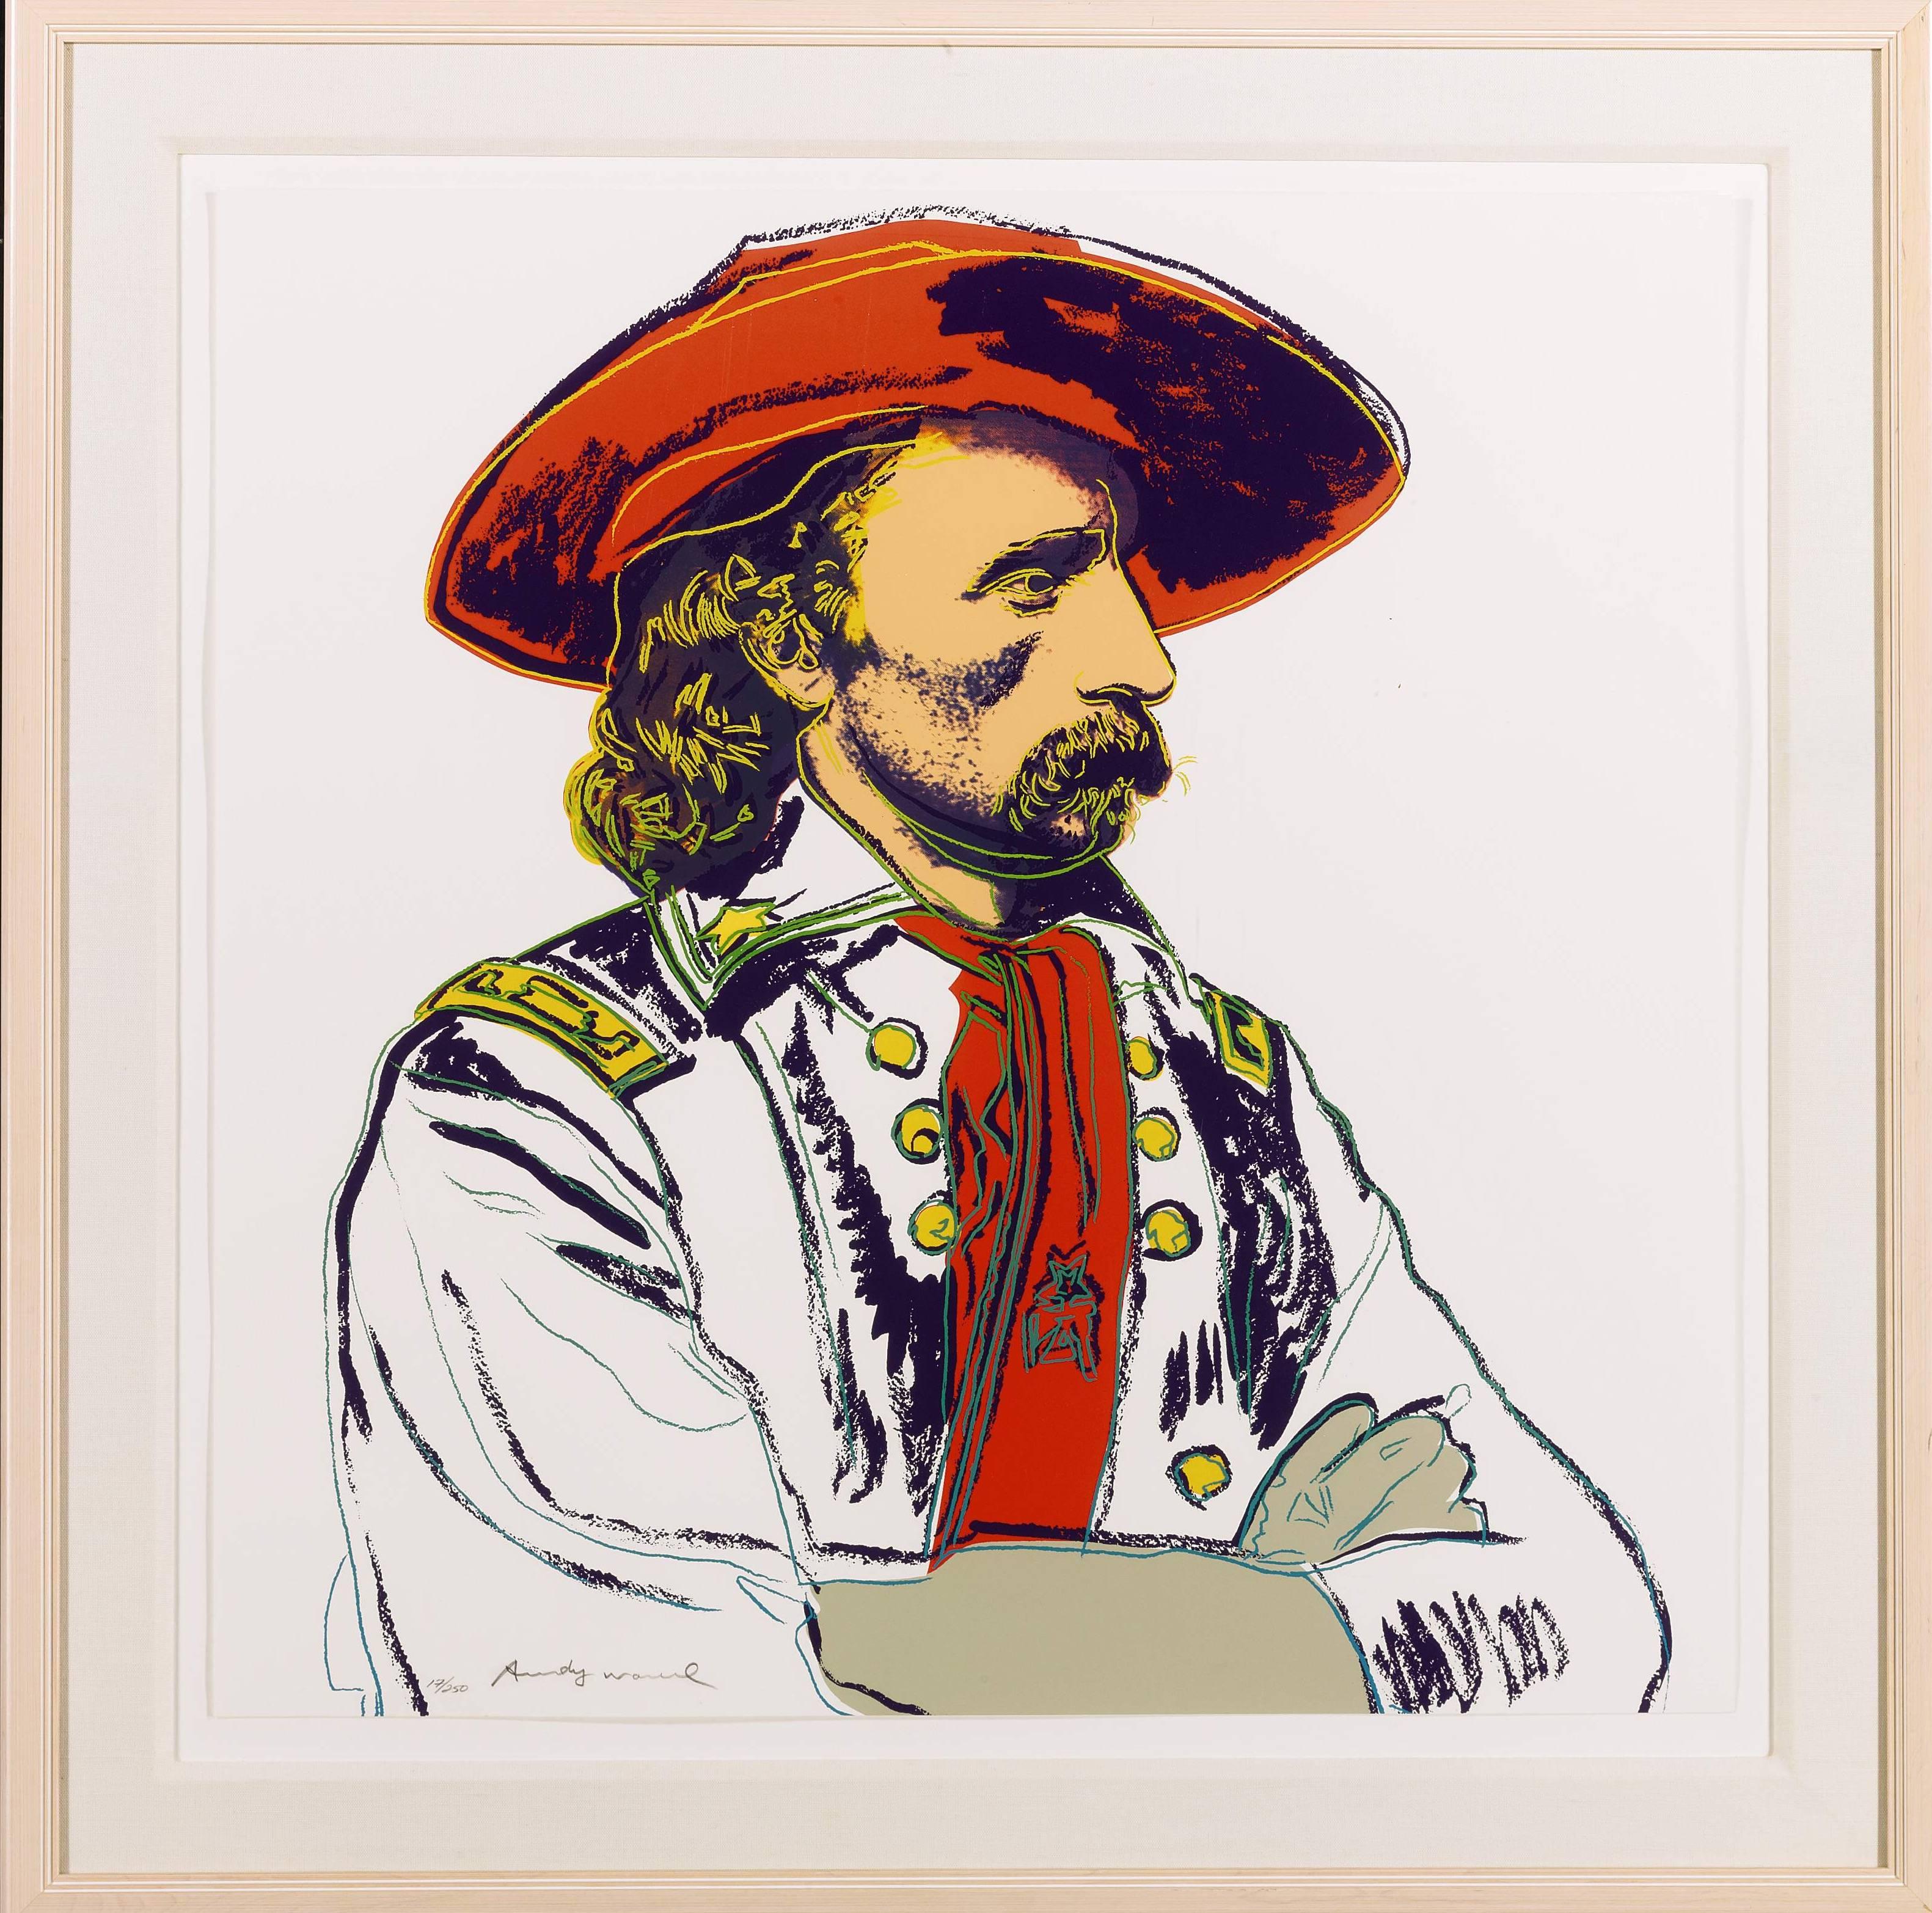 Andy Warhol Portrait Print - General Custer 1986 F&S II.379